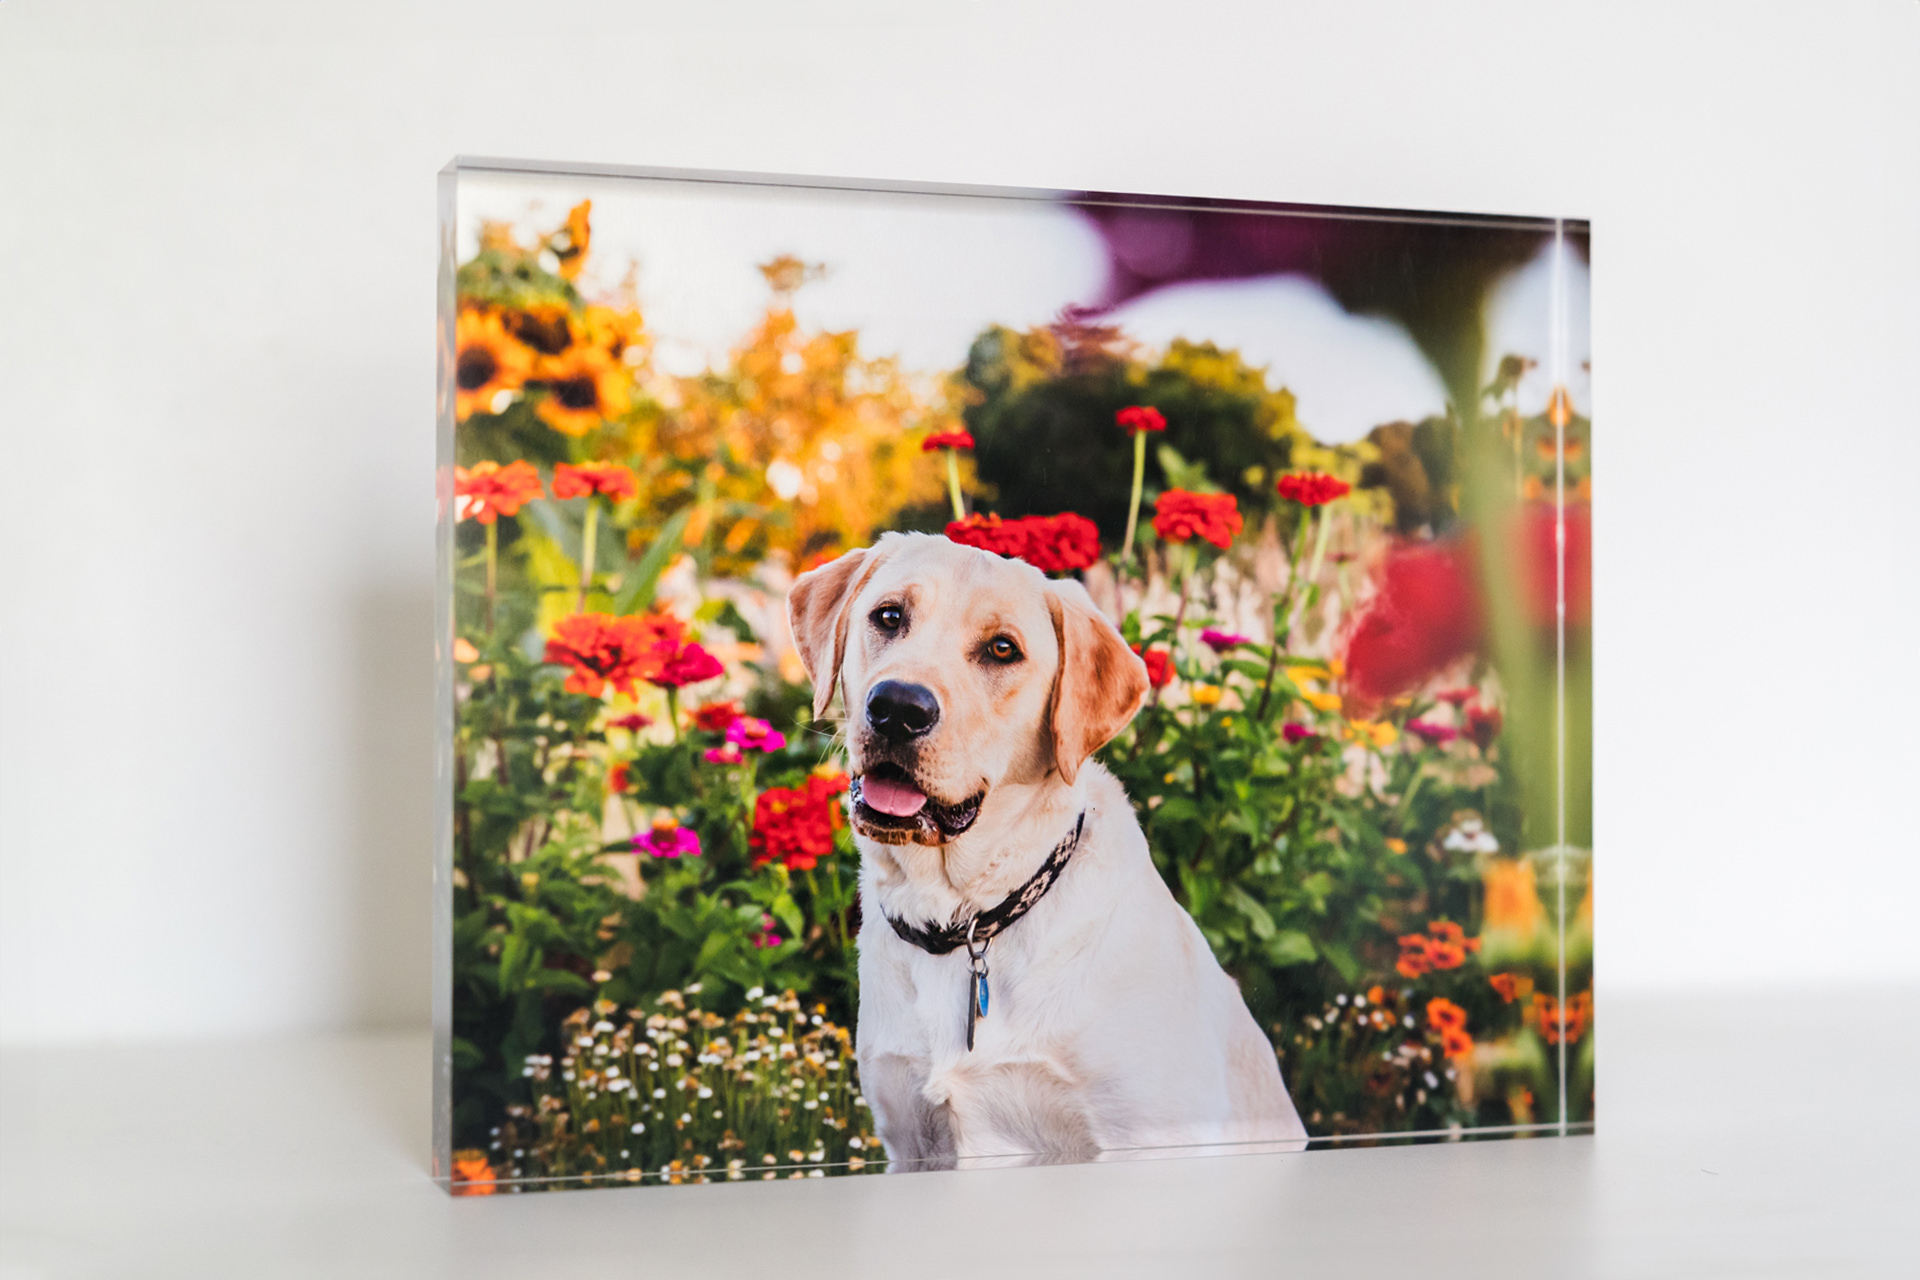 Framed photo of a Labrador in a flower garden.